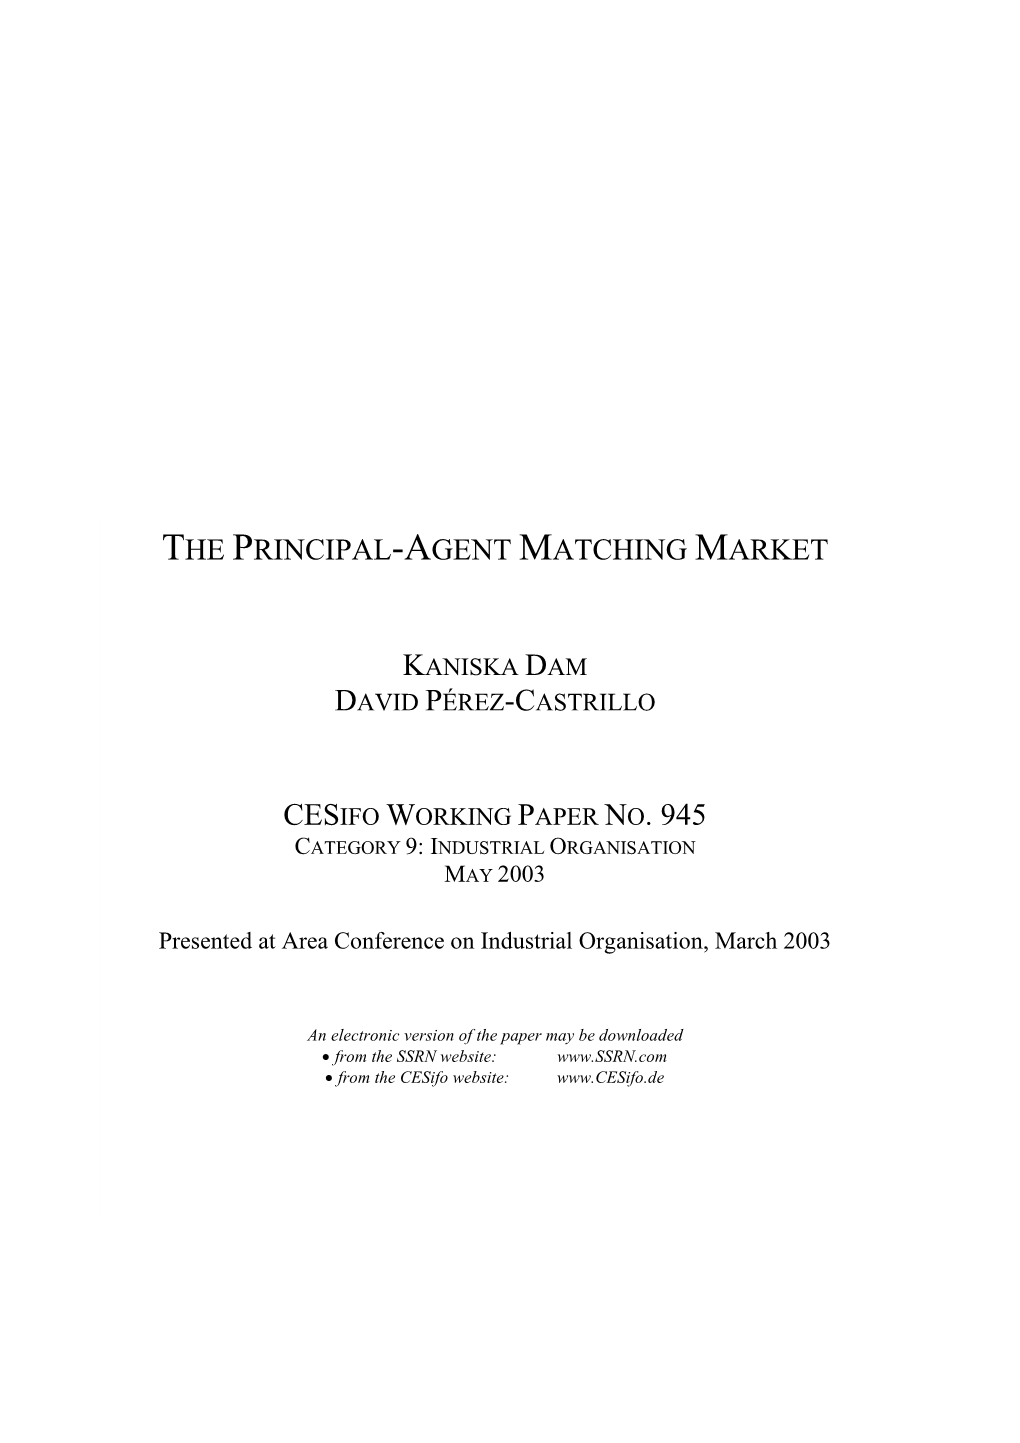 The Principal-Agent Matching Market